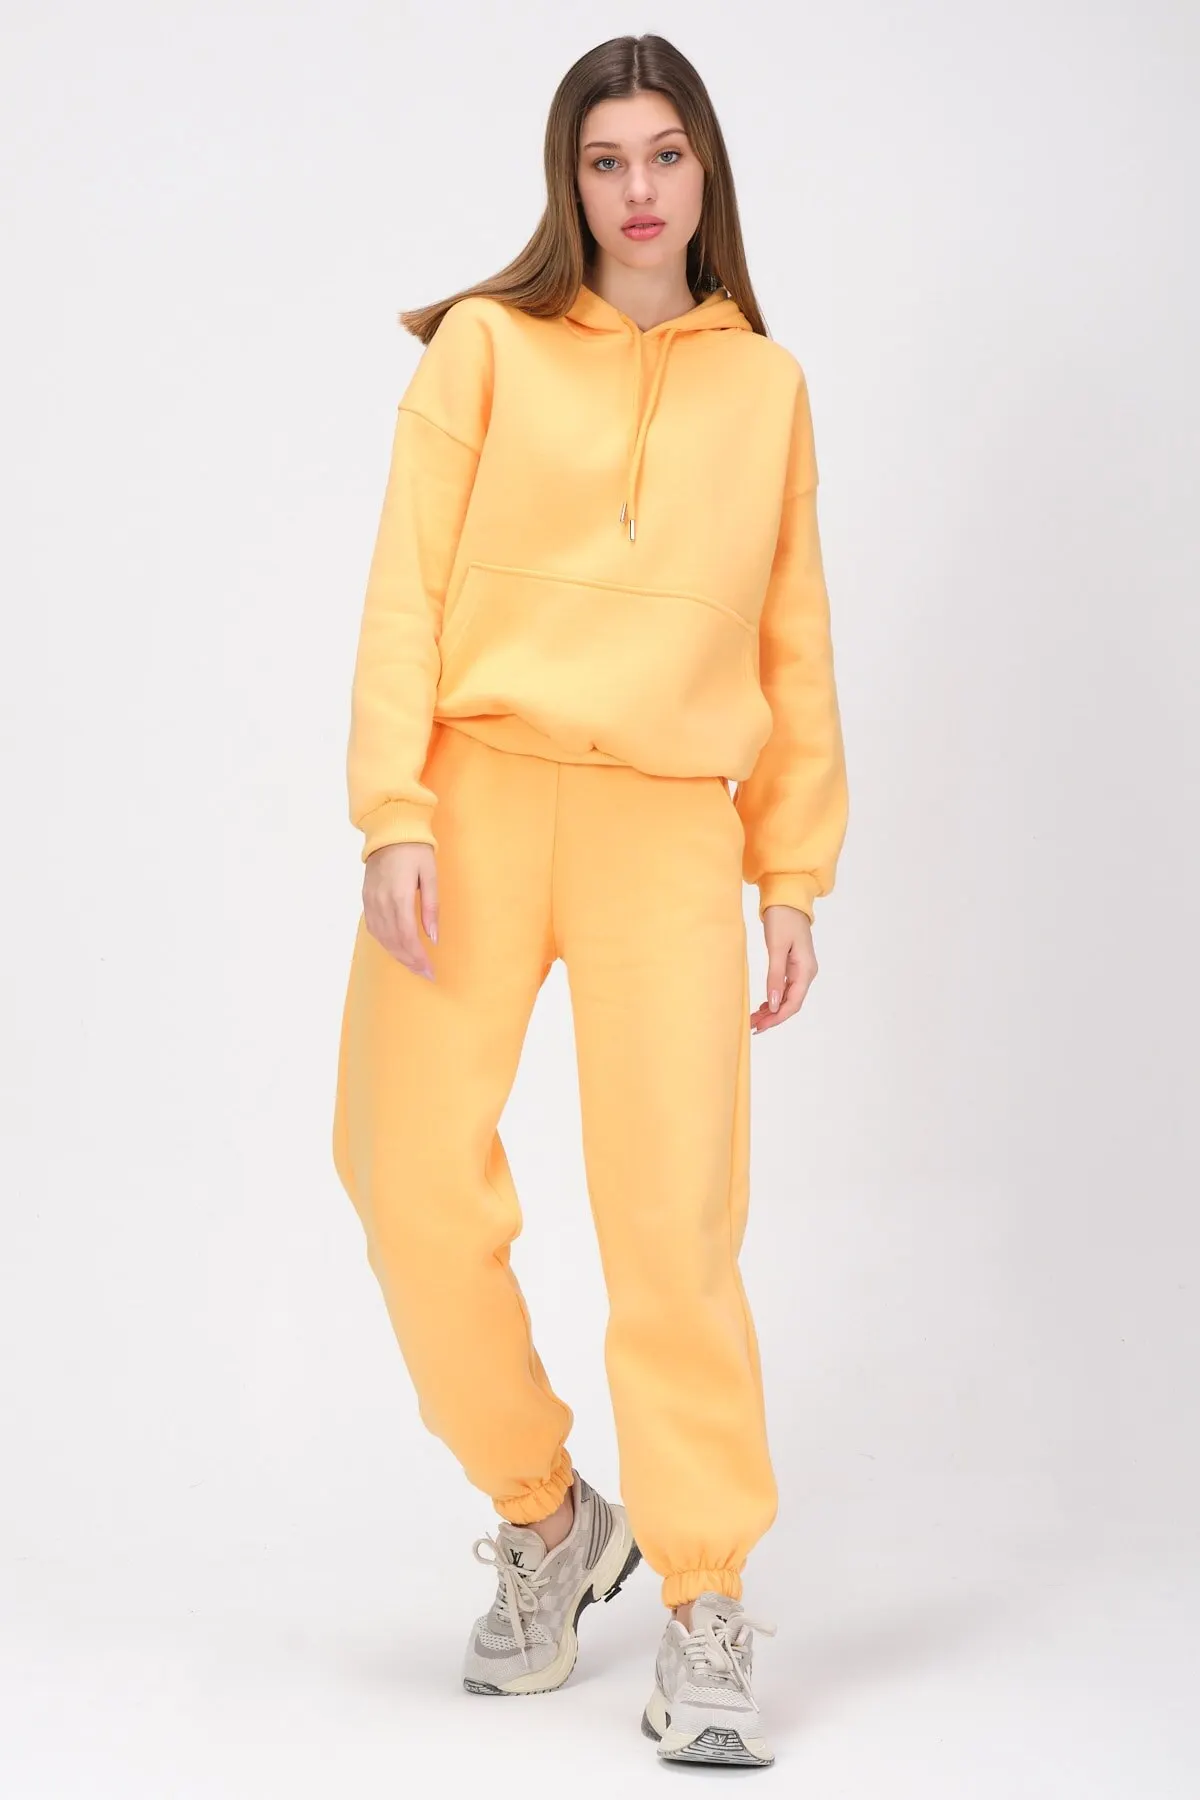 

Women's Sweatshirt Mustard Yellow Hooded Fleece Kangaroo Pocket Basic Hoodies Fashion All Season New Pullovers Fleece lovers Fleece